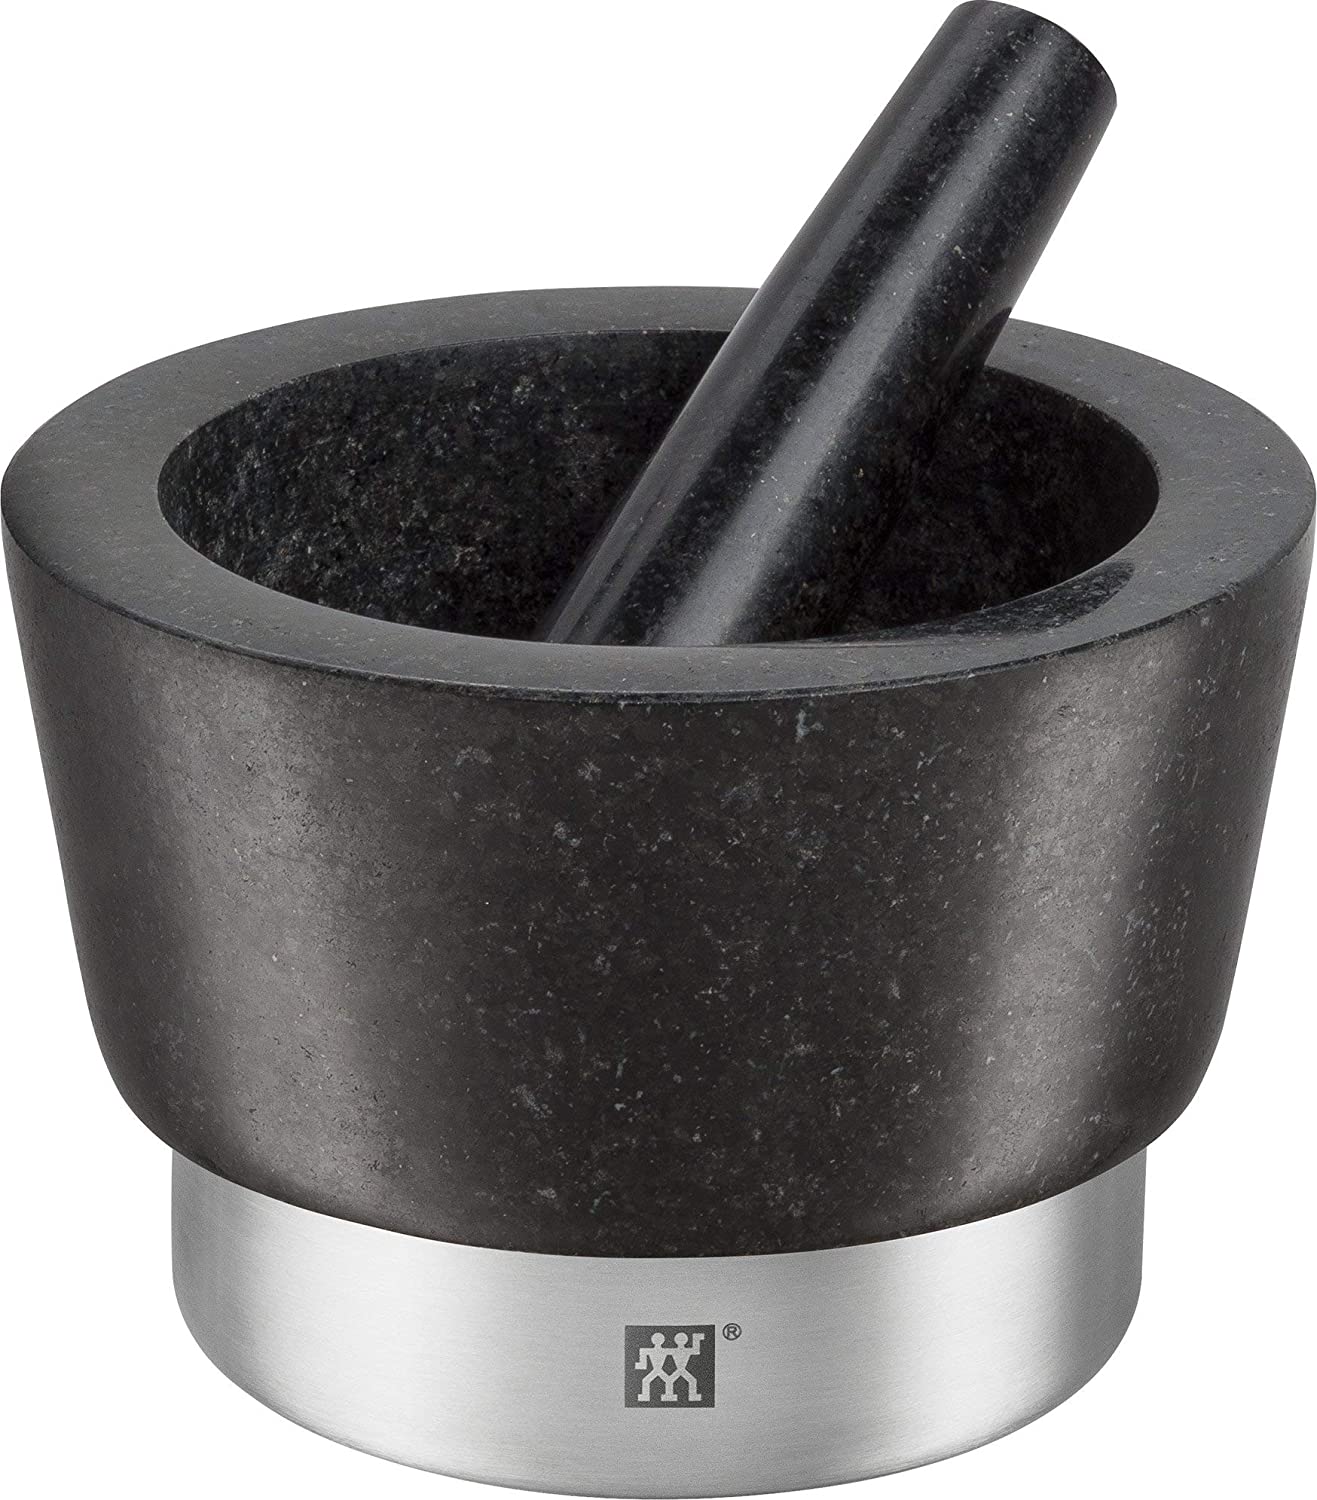 Zwilling Spices Mortar with Pestle, Diameter 11 cm, Granite, Black, 15 cm